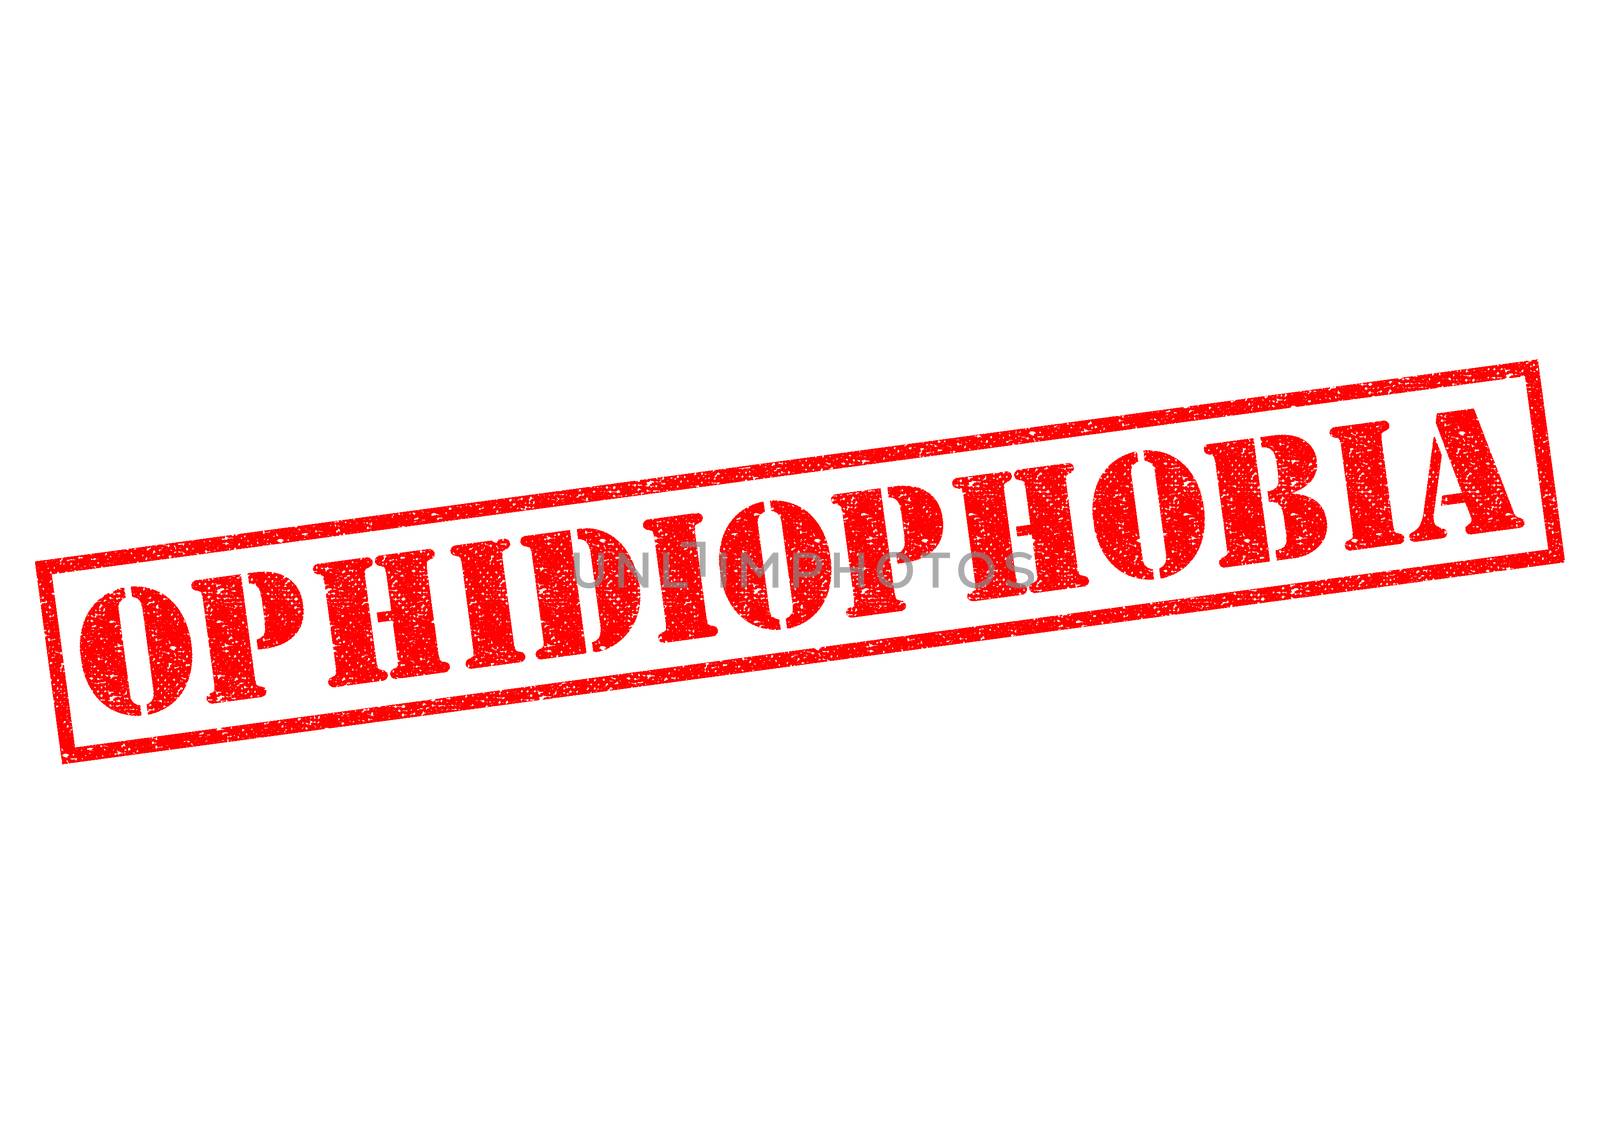 OPHIDIOPHOBIA by chrisdorney